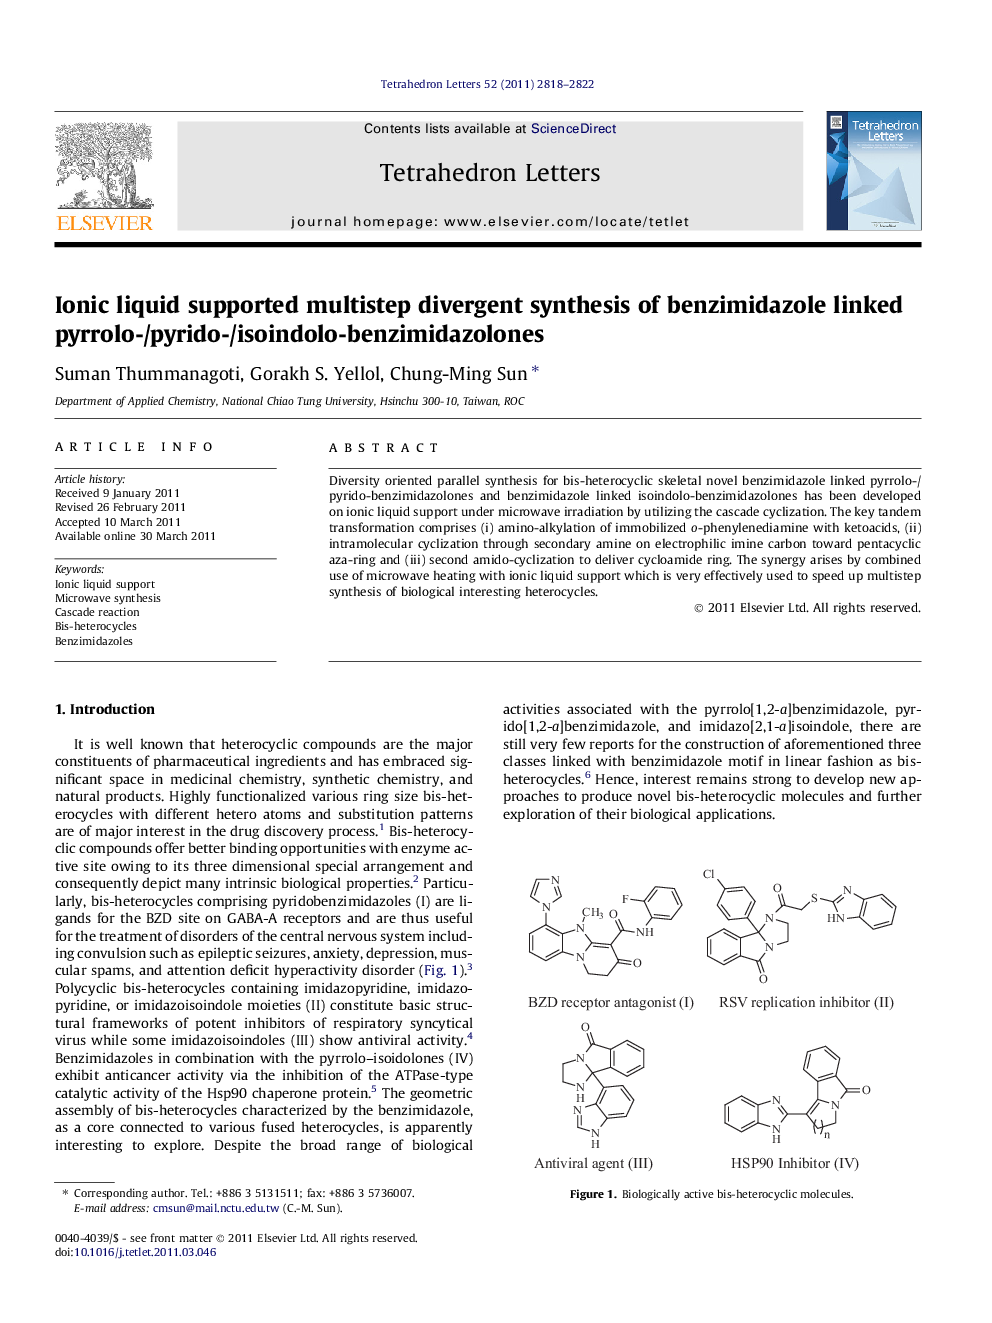 Ionic liquid supported multistep divergent synthesis of benzimidazole linked pyrrolo-/pyrido-/isoindolo-benzimidazolones